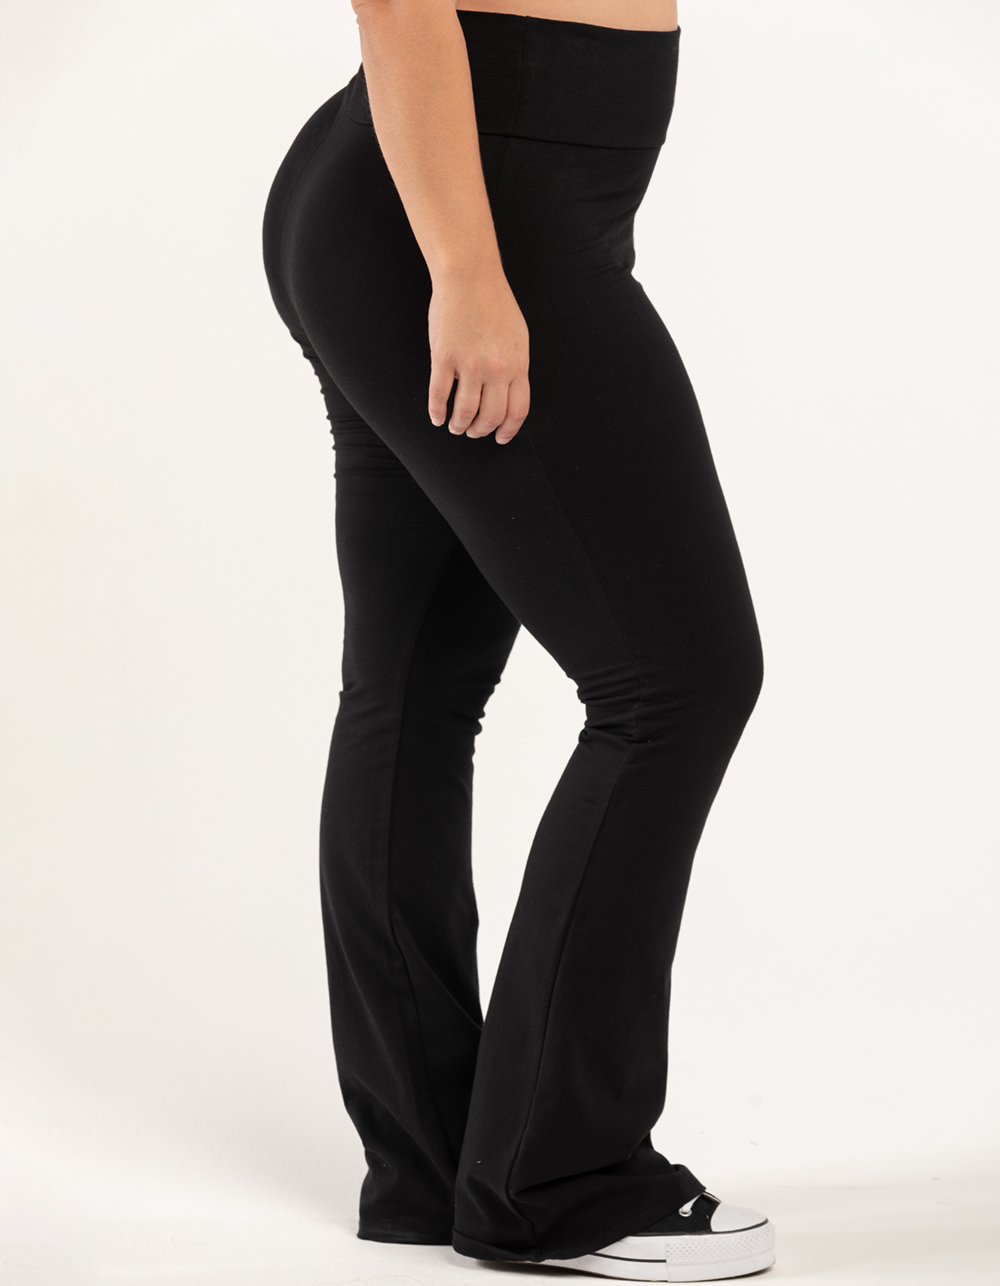 how to style black flare leggings!! 🌞😻 #nowplaying #blackflaredleggi